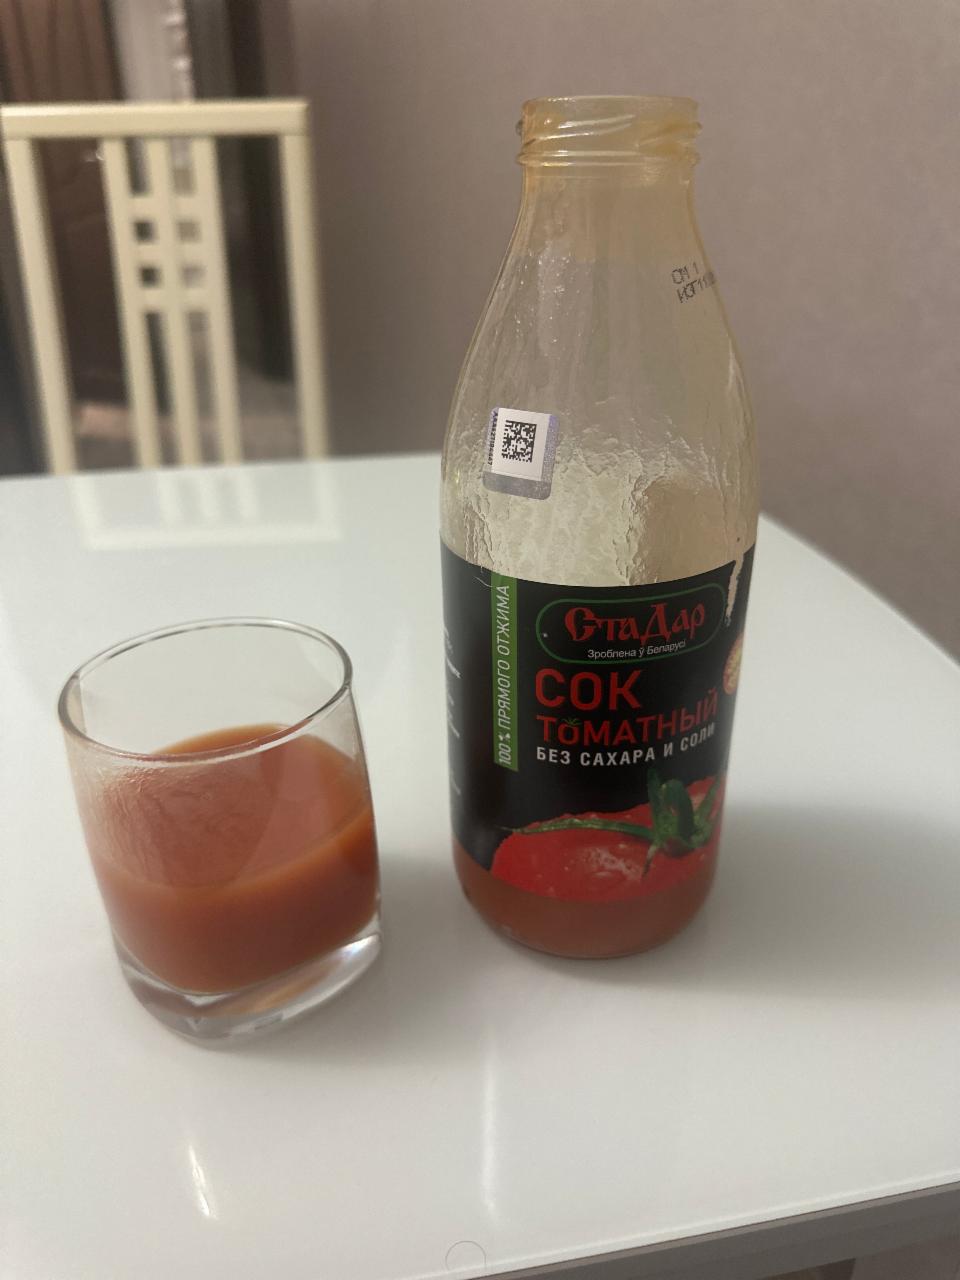 Фото - Сок томатный без сахара и соли Стадар